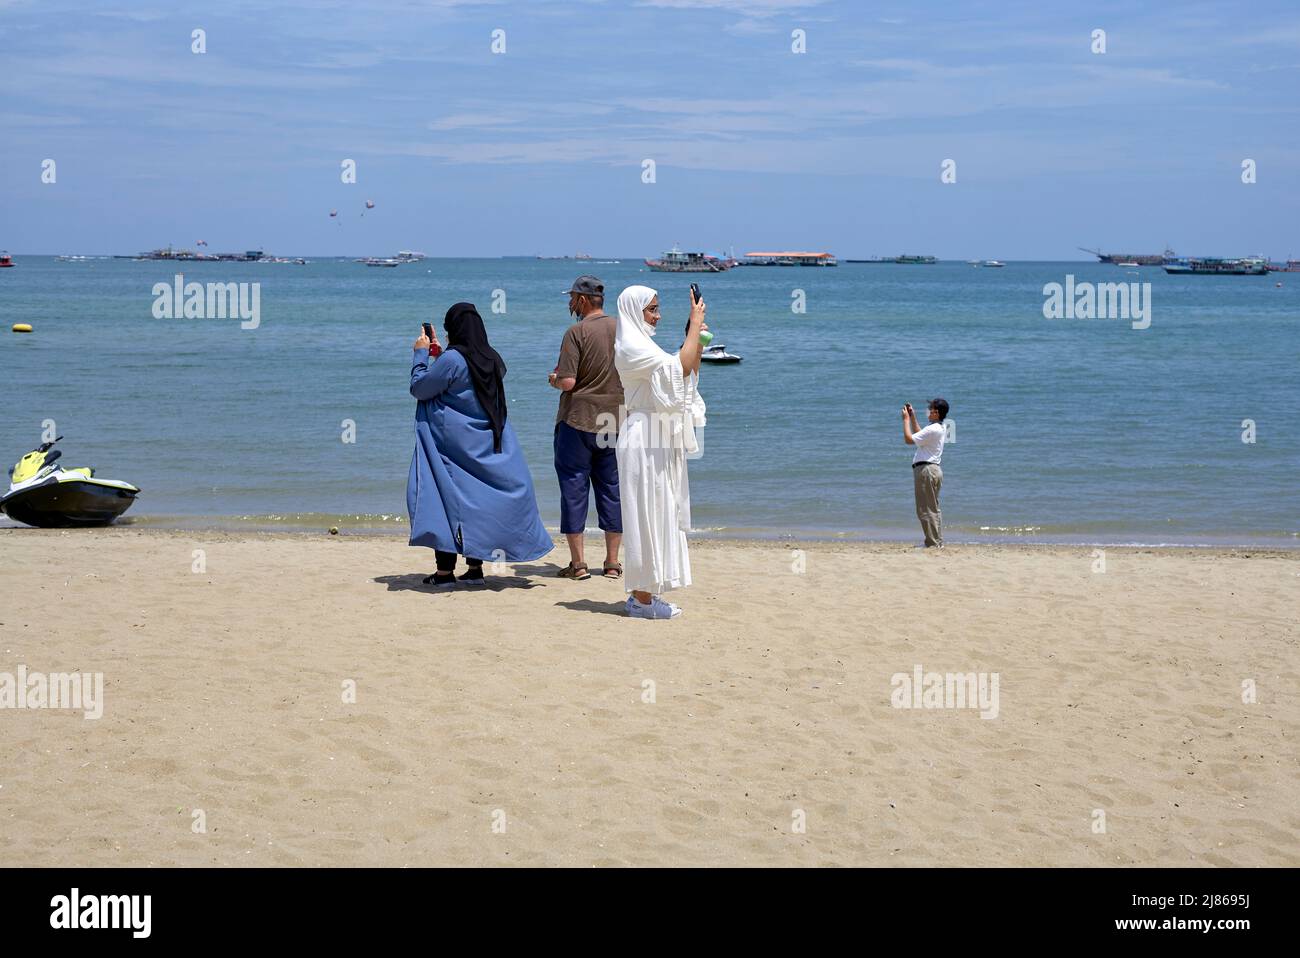 Arab selfie. Arab women in traditional abaya clothing taking selfies on the beach. Pattaya Thailand Stock Photo